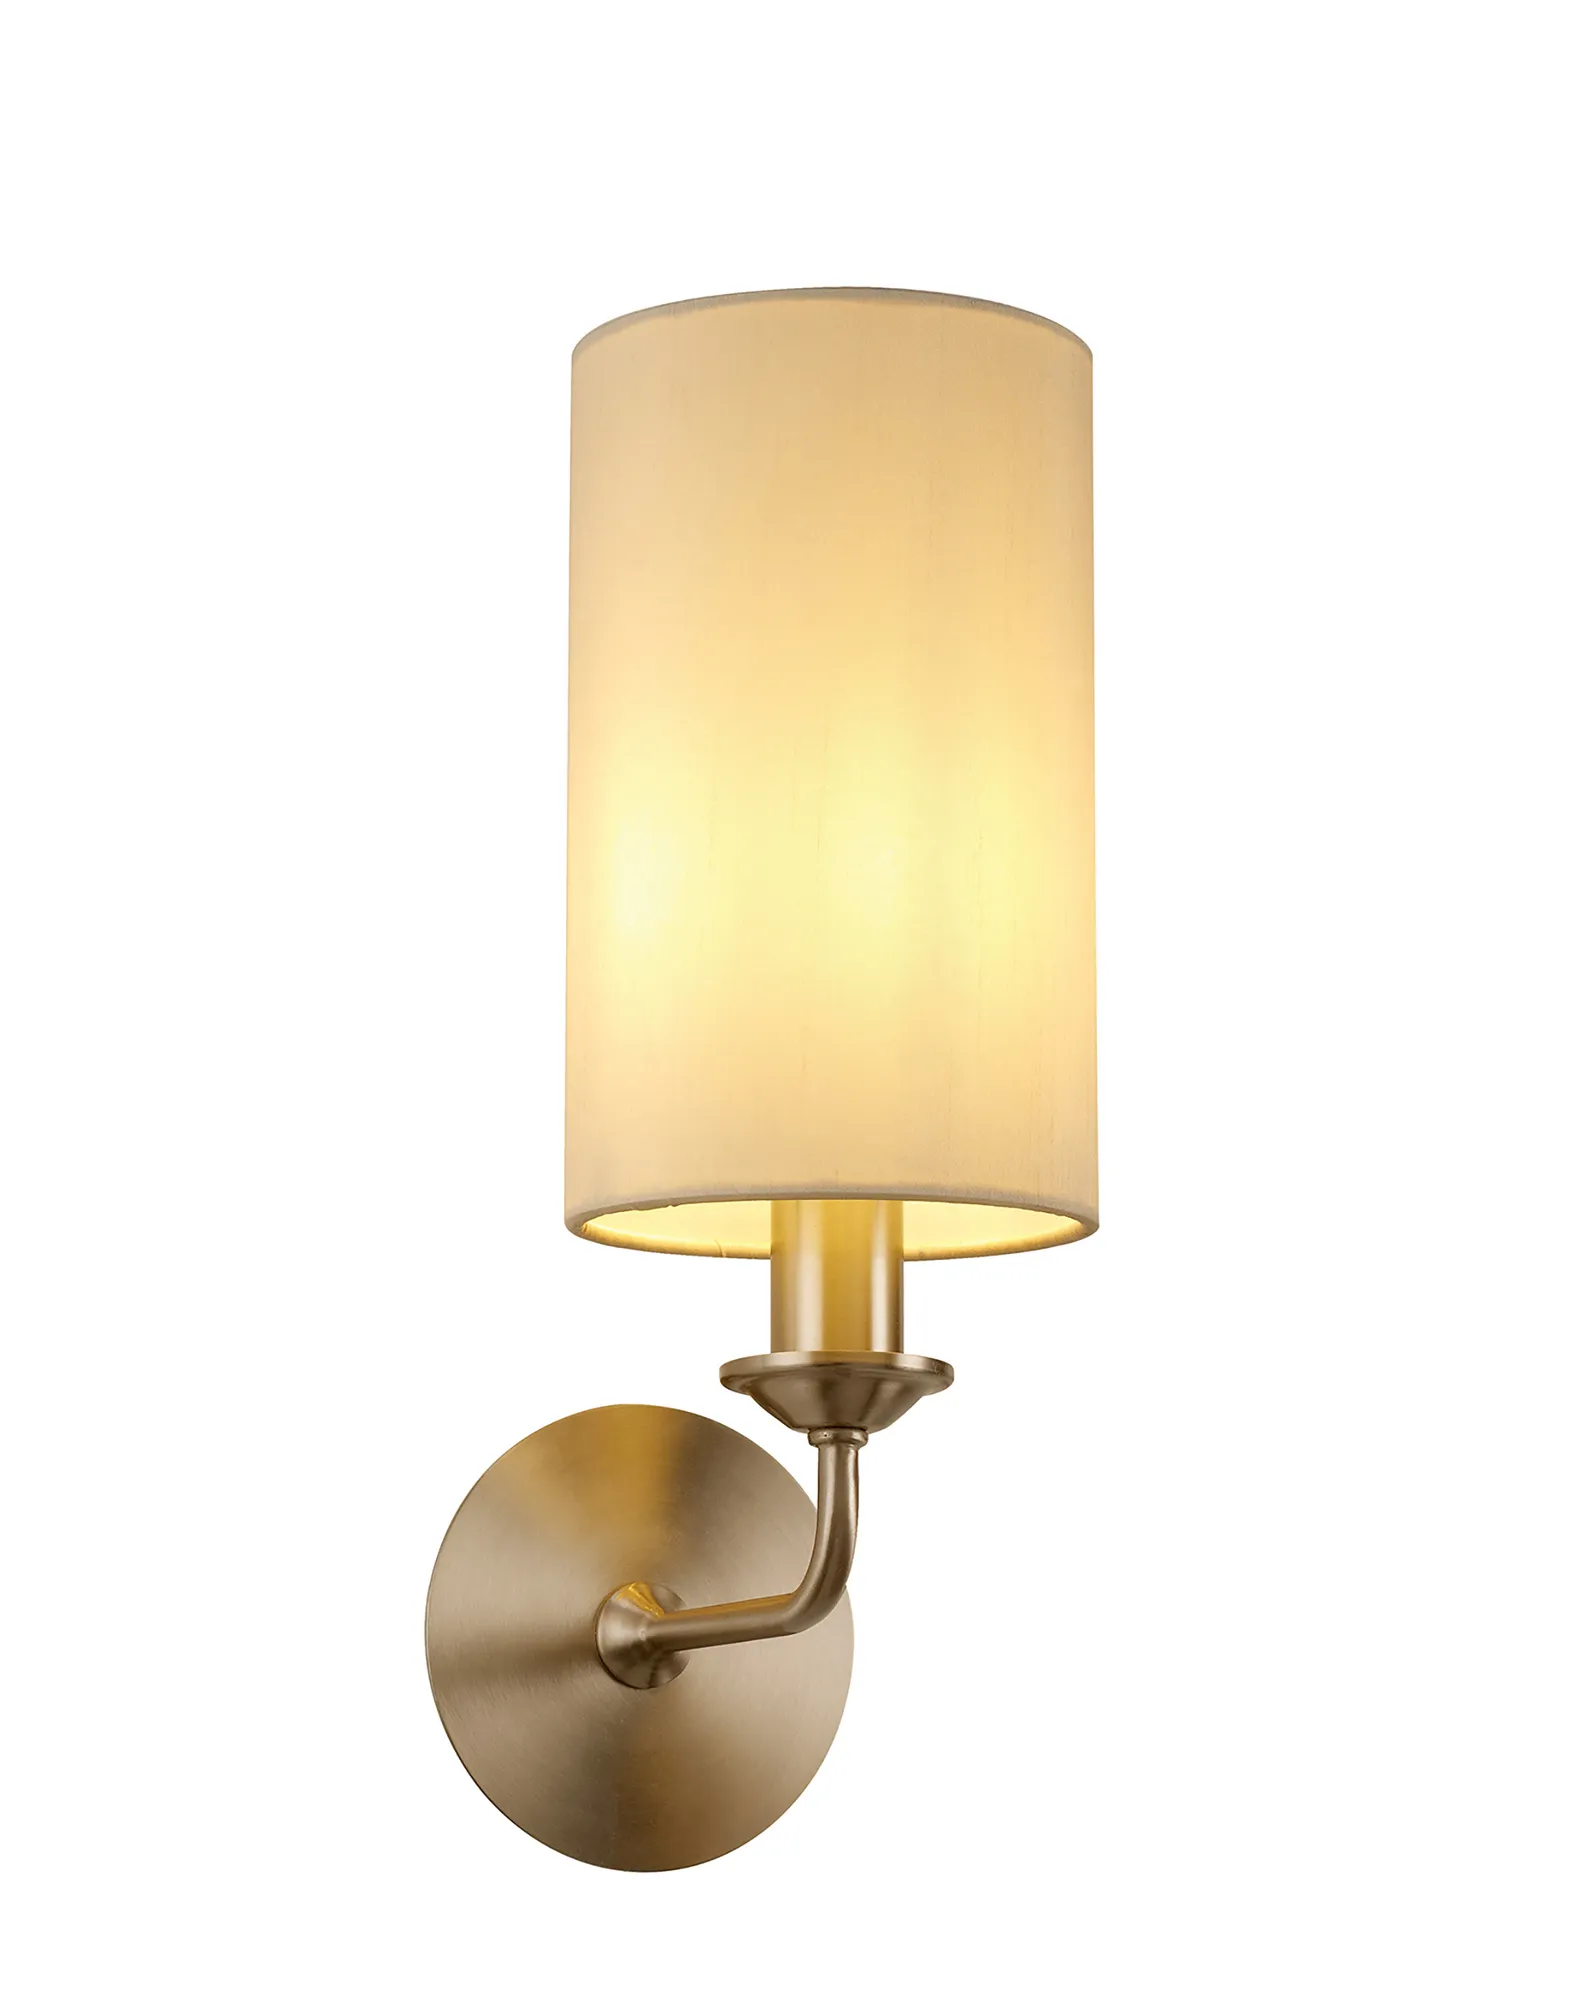 DK0064  Banyan Wall Lamp 1 Light Satin Nickel; Ivory Pearl